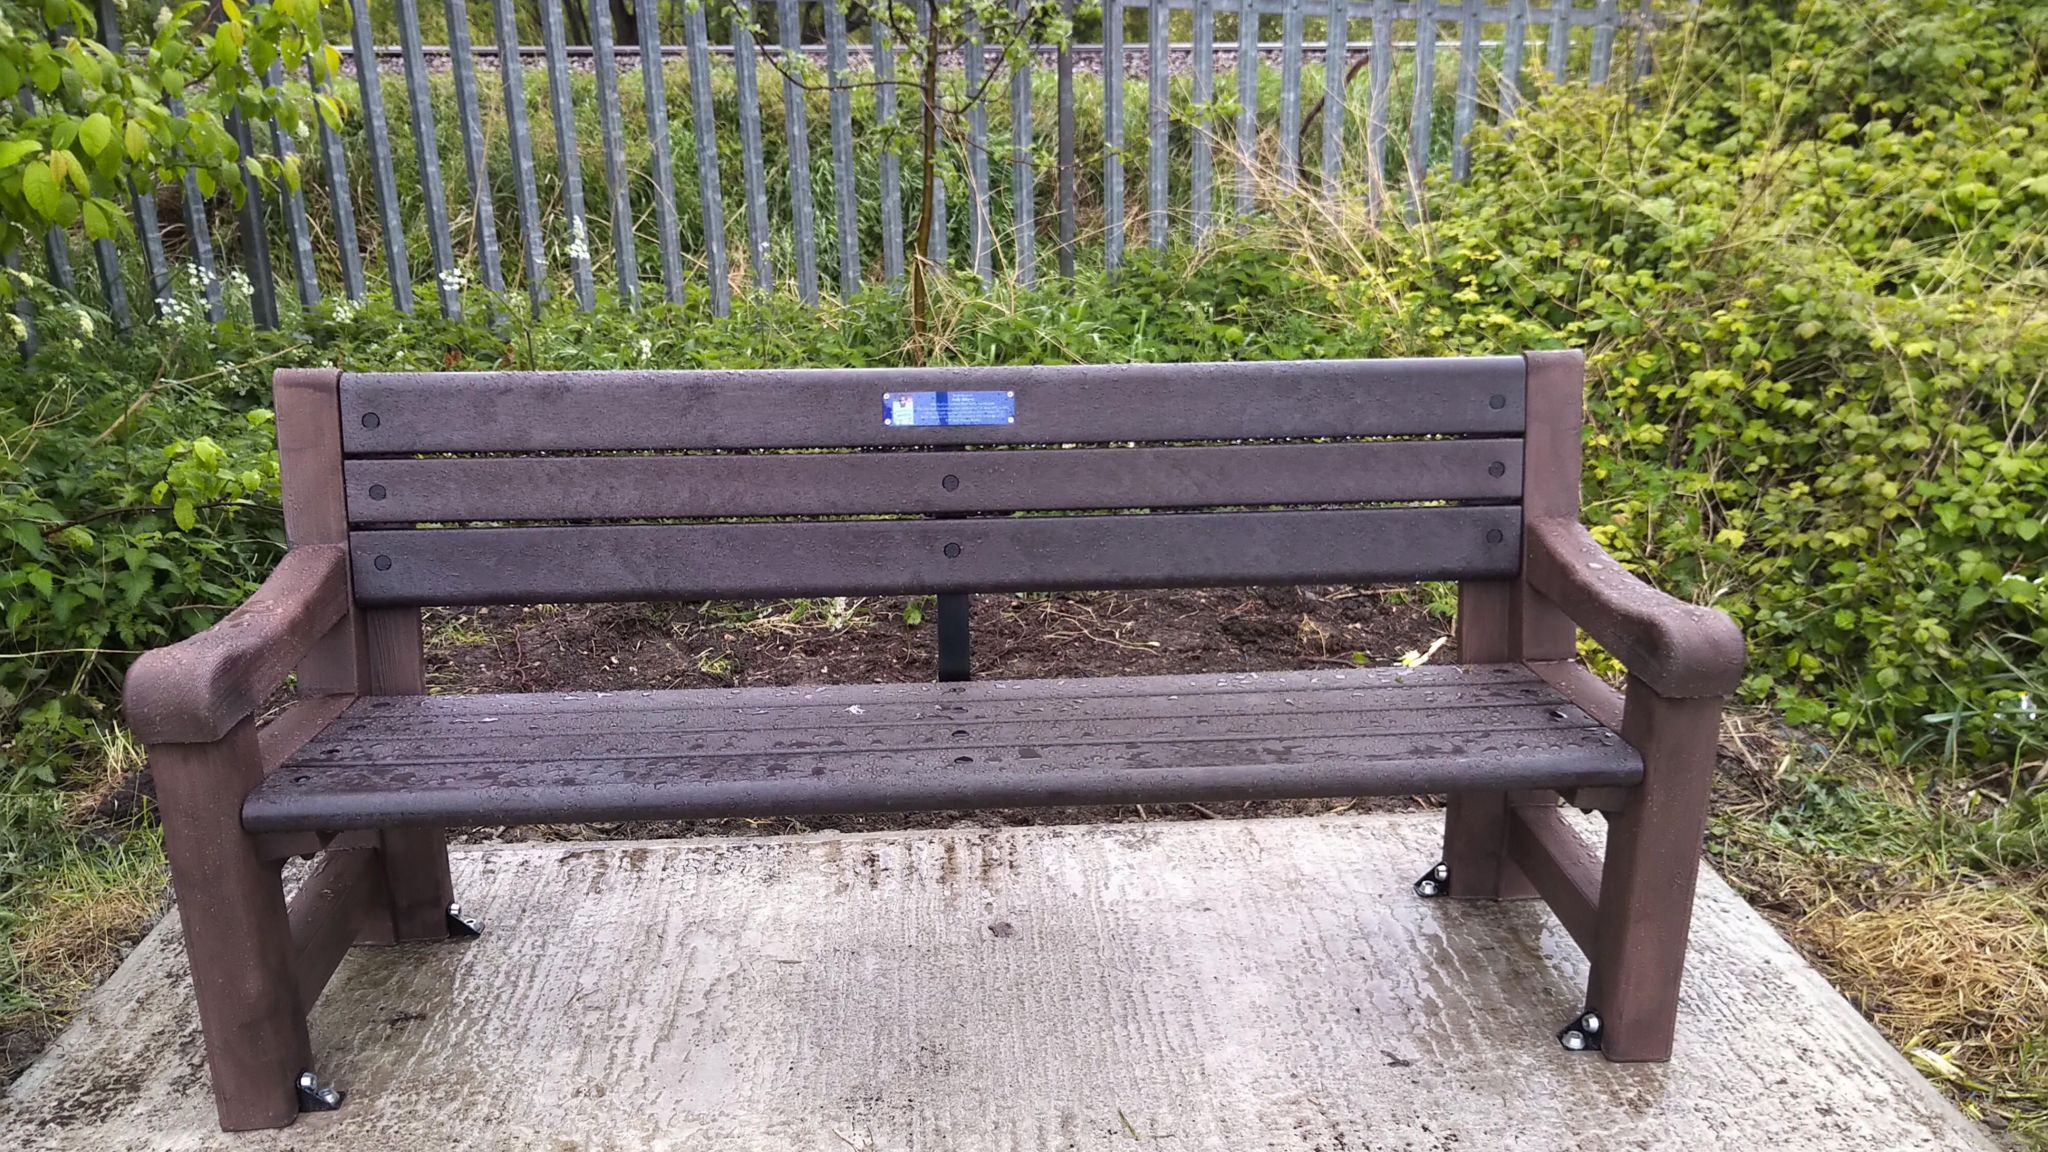 The commemorative bench